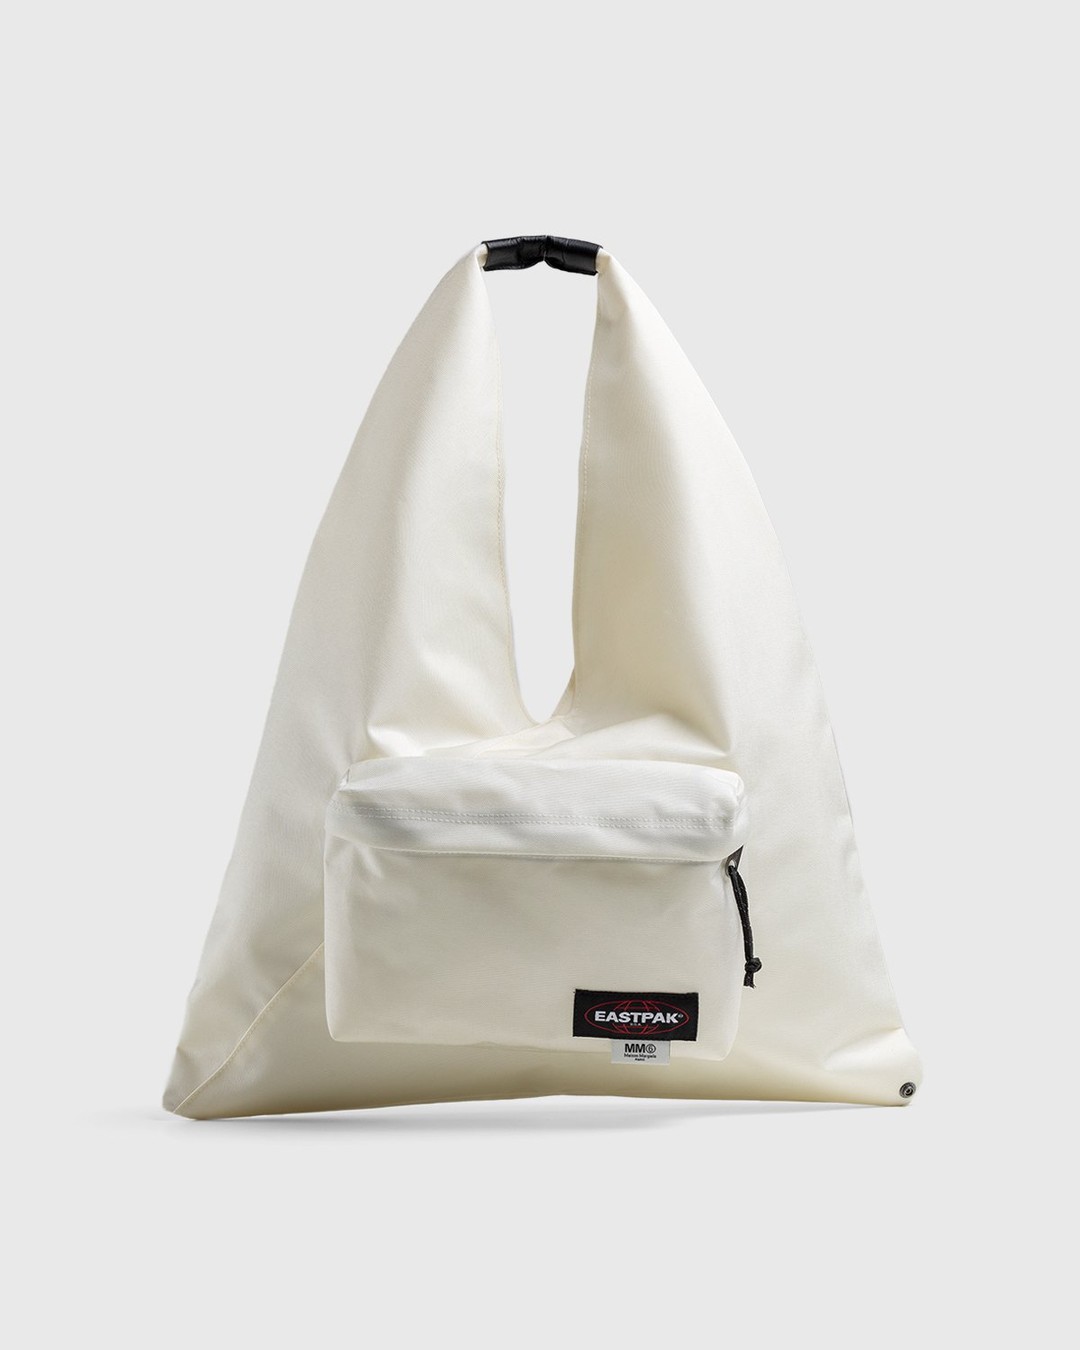 MM6 Maison Margiela x Eastpak – Borsa Shopping Bag White - Bags - White - Image 1